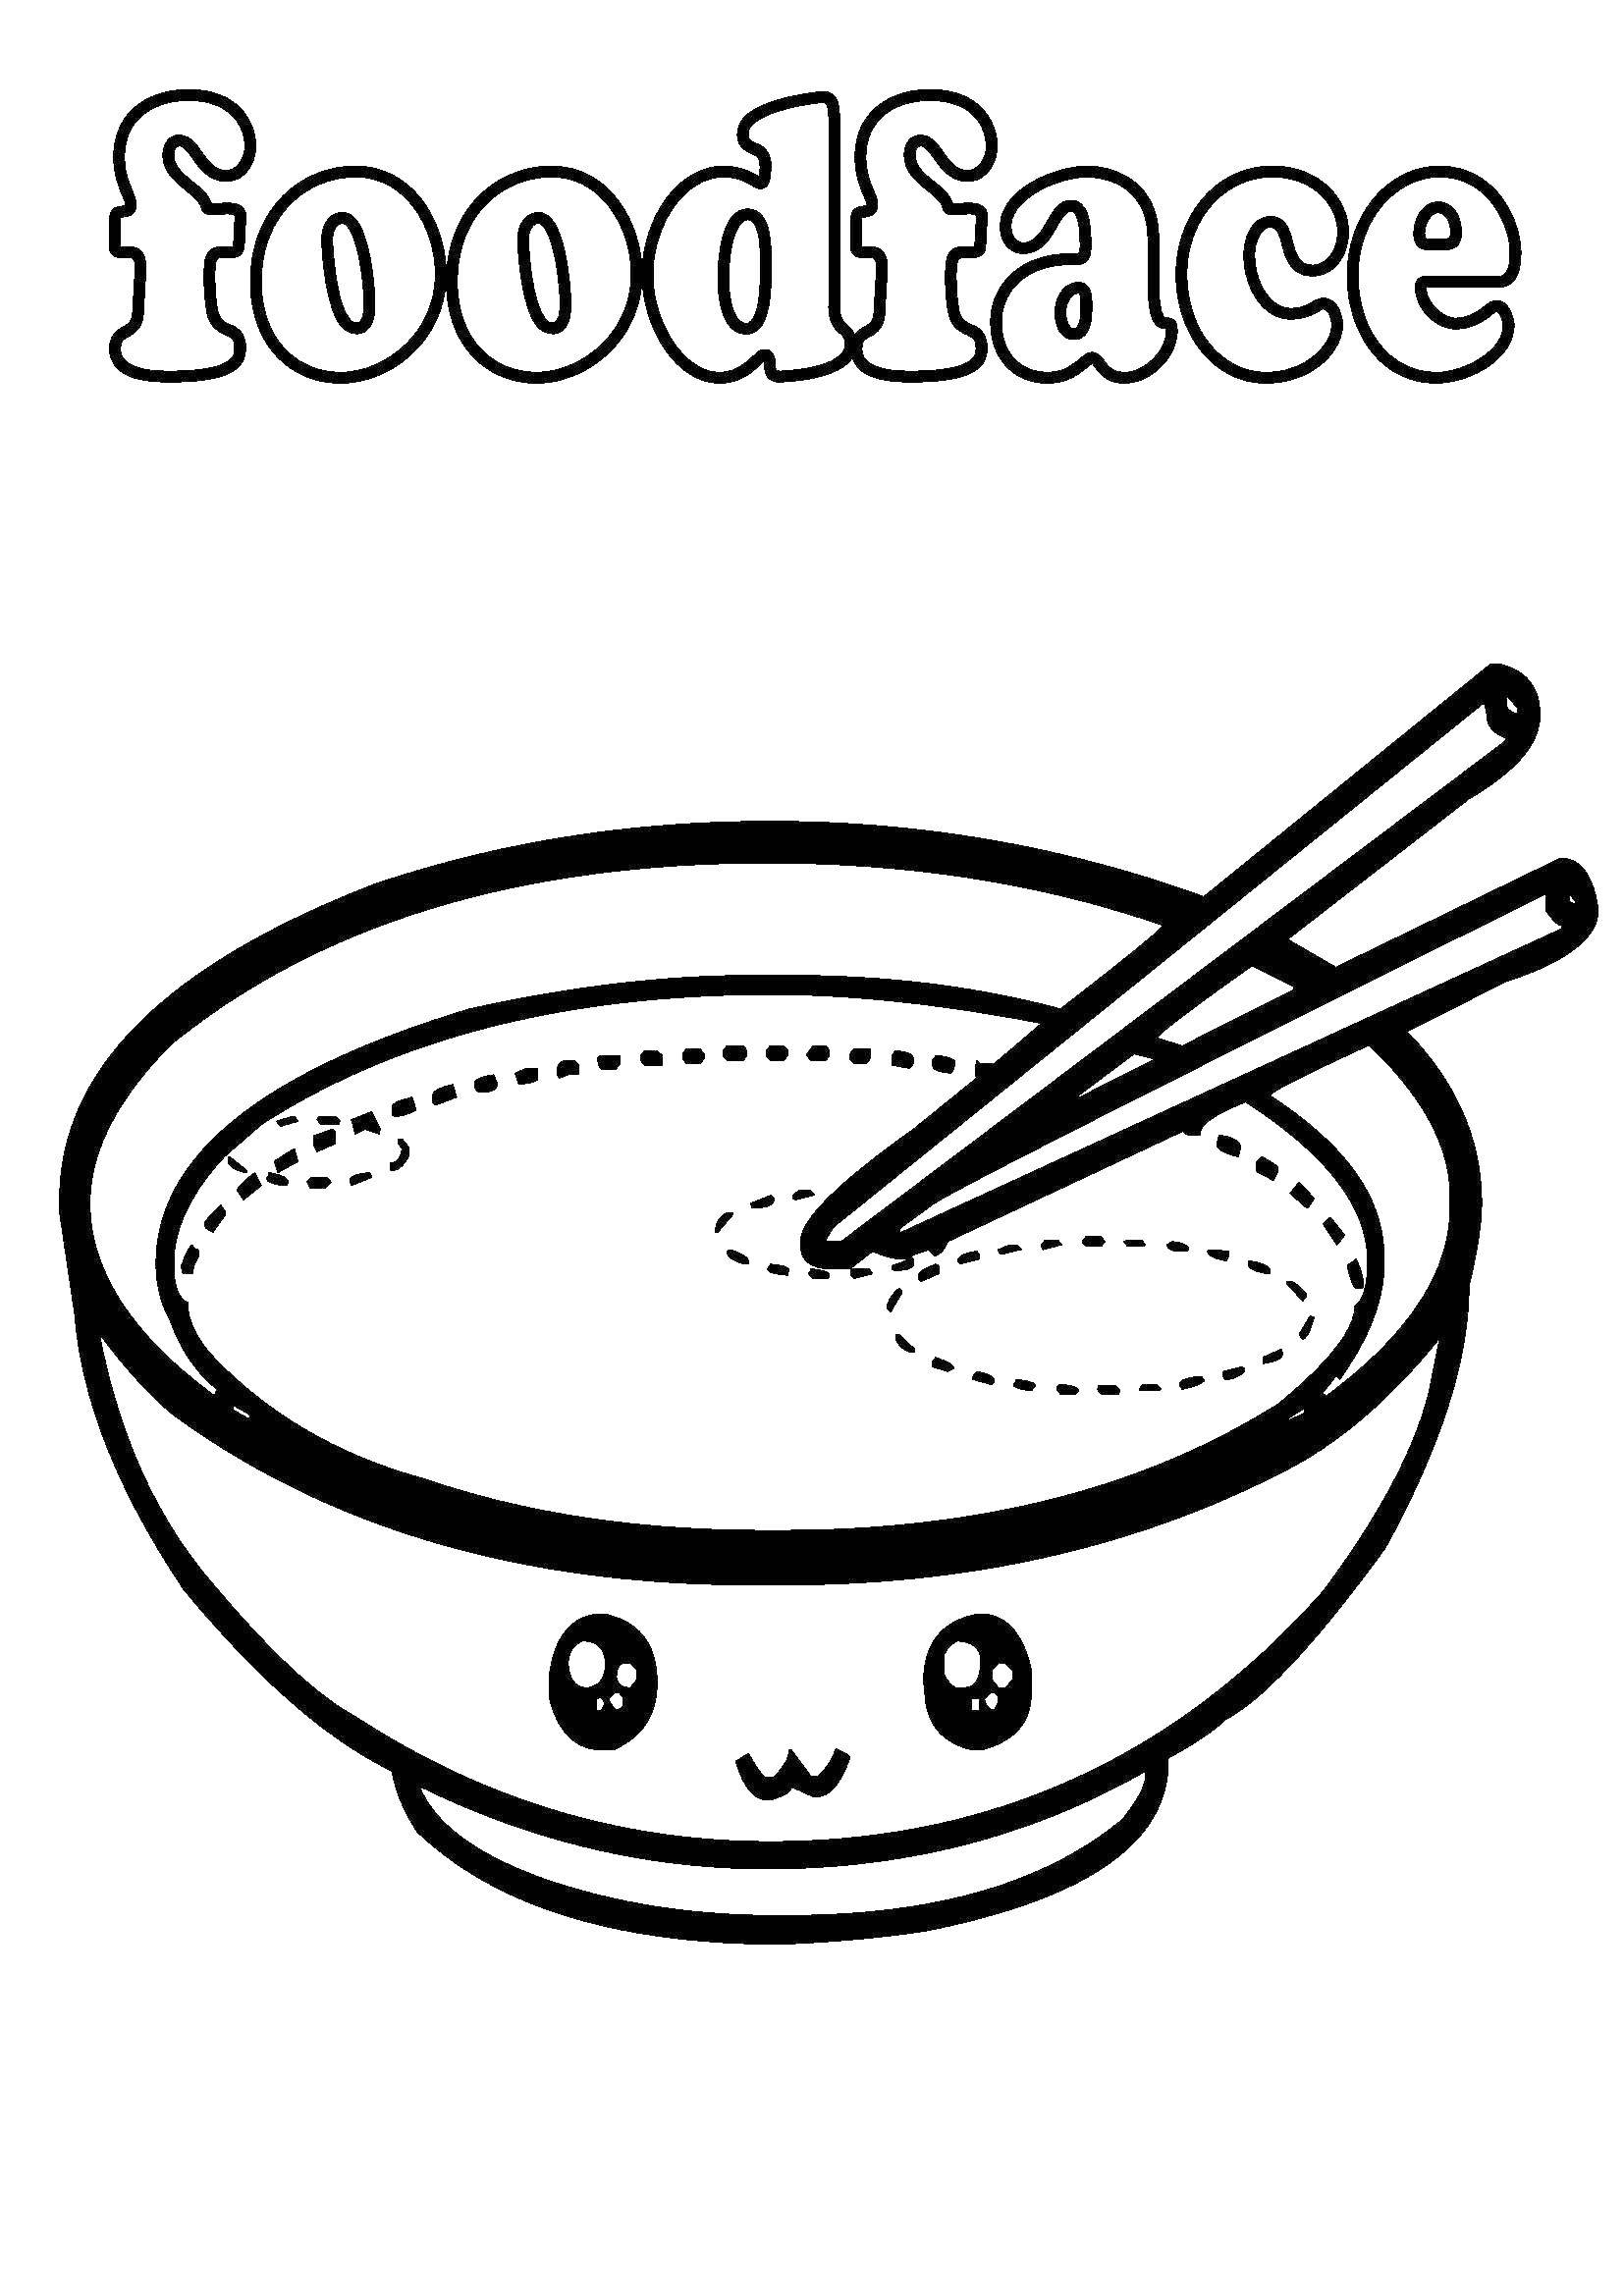 Опис: розмальовки  Миска з супом. Категорія: Їжа. Теги:  їжа, суп.